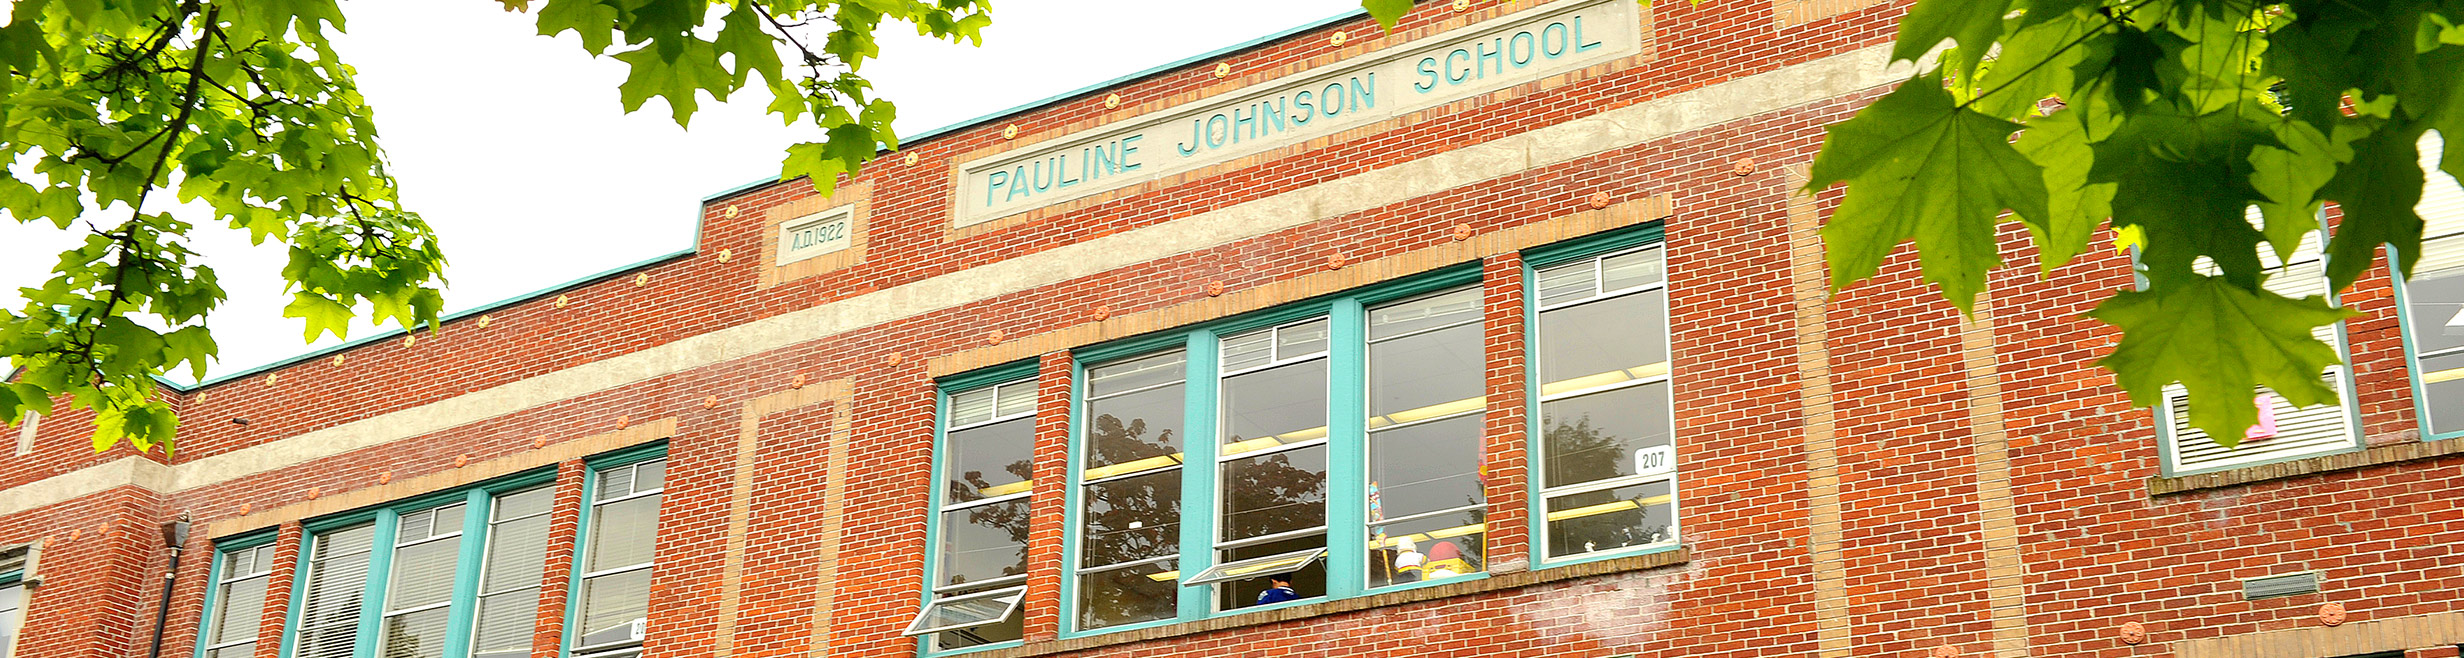 Ecole Pauline Johnson